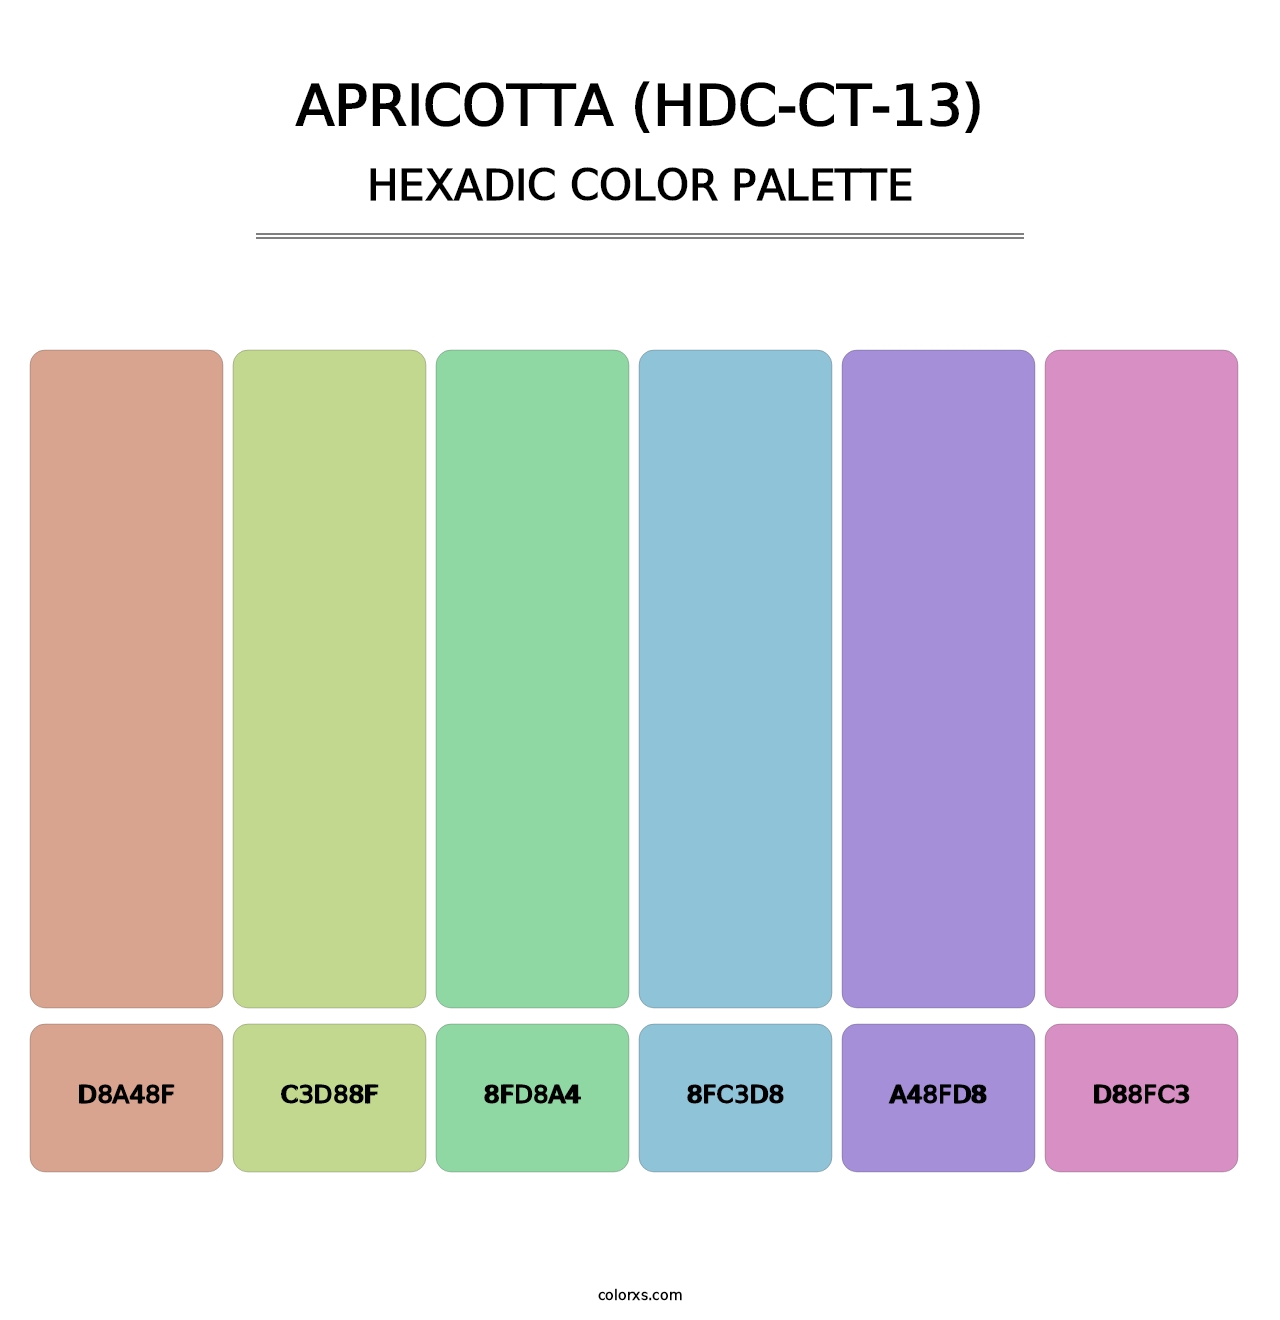 Apricotta (HDC-CT-13) - Hexadic Color Palette